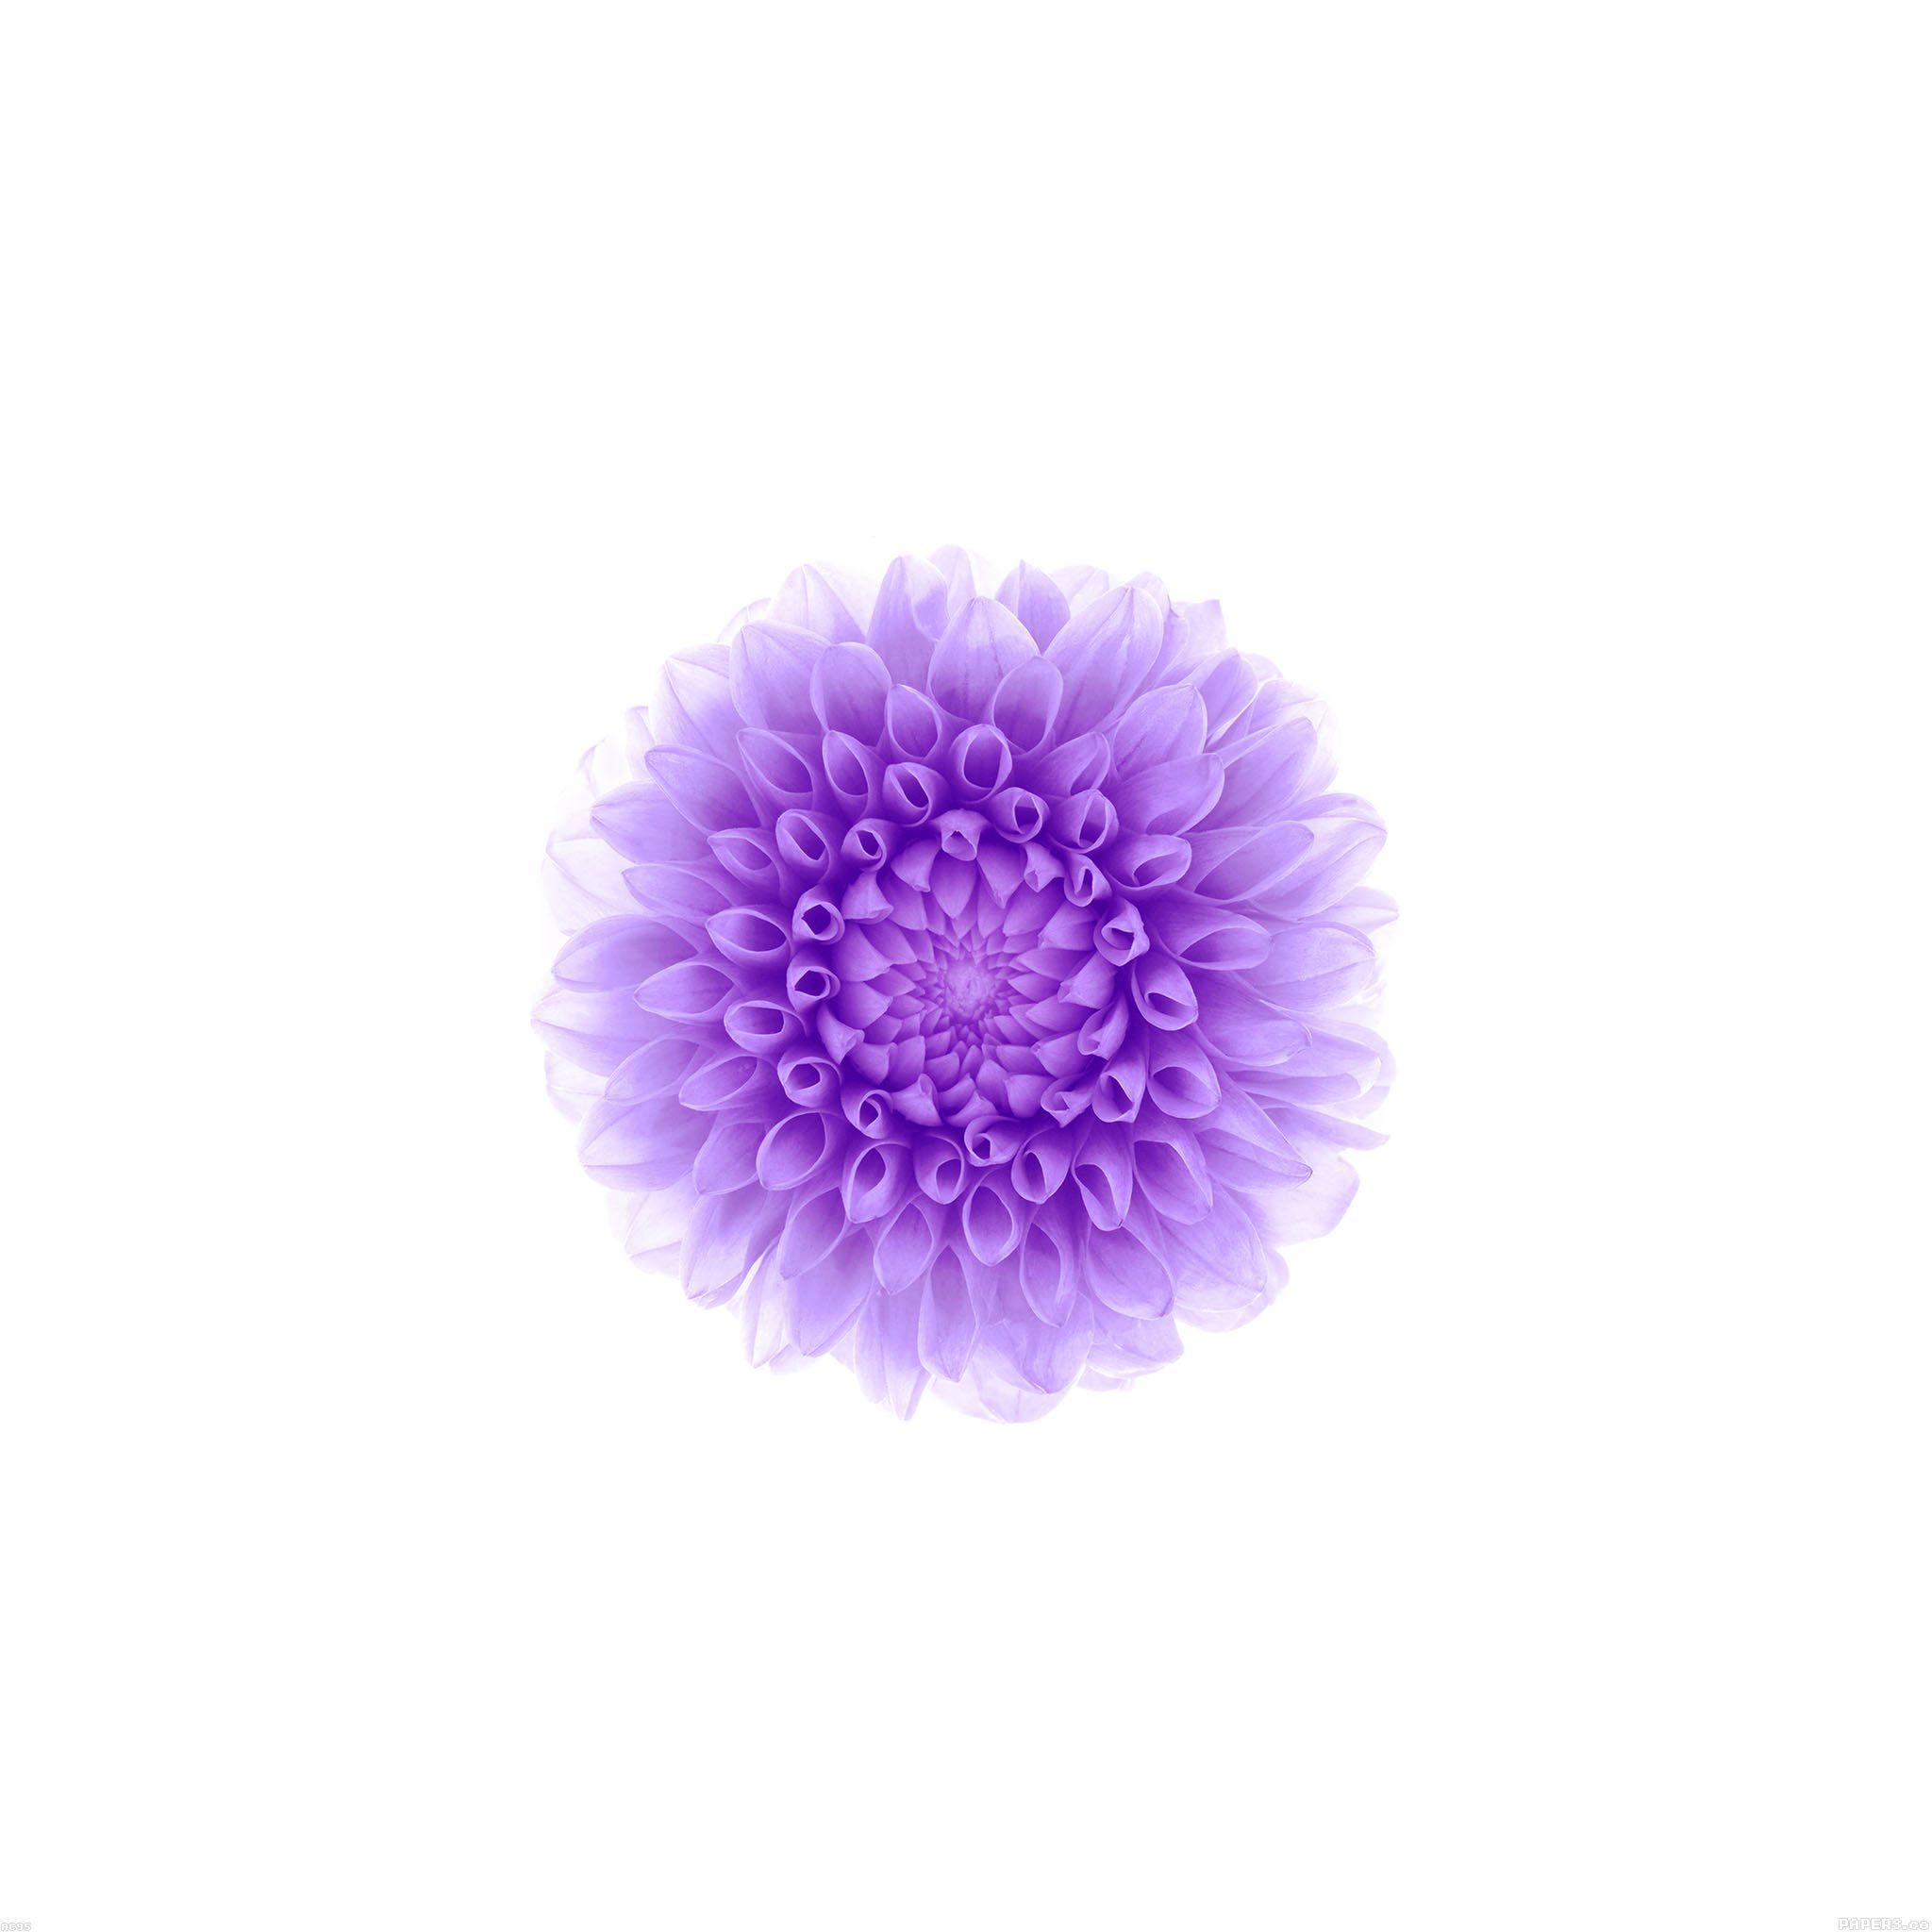 Wallpaper Apple Iphone6 Plus Ios8 Flower Purple Wallpaper